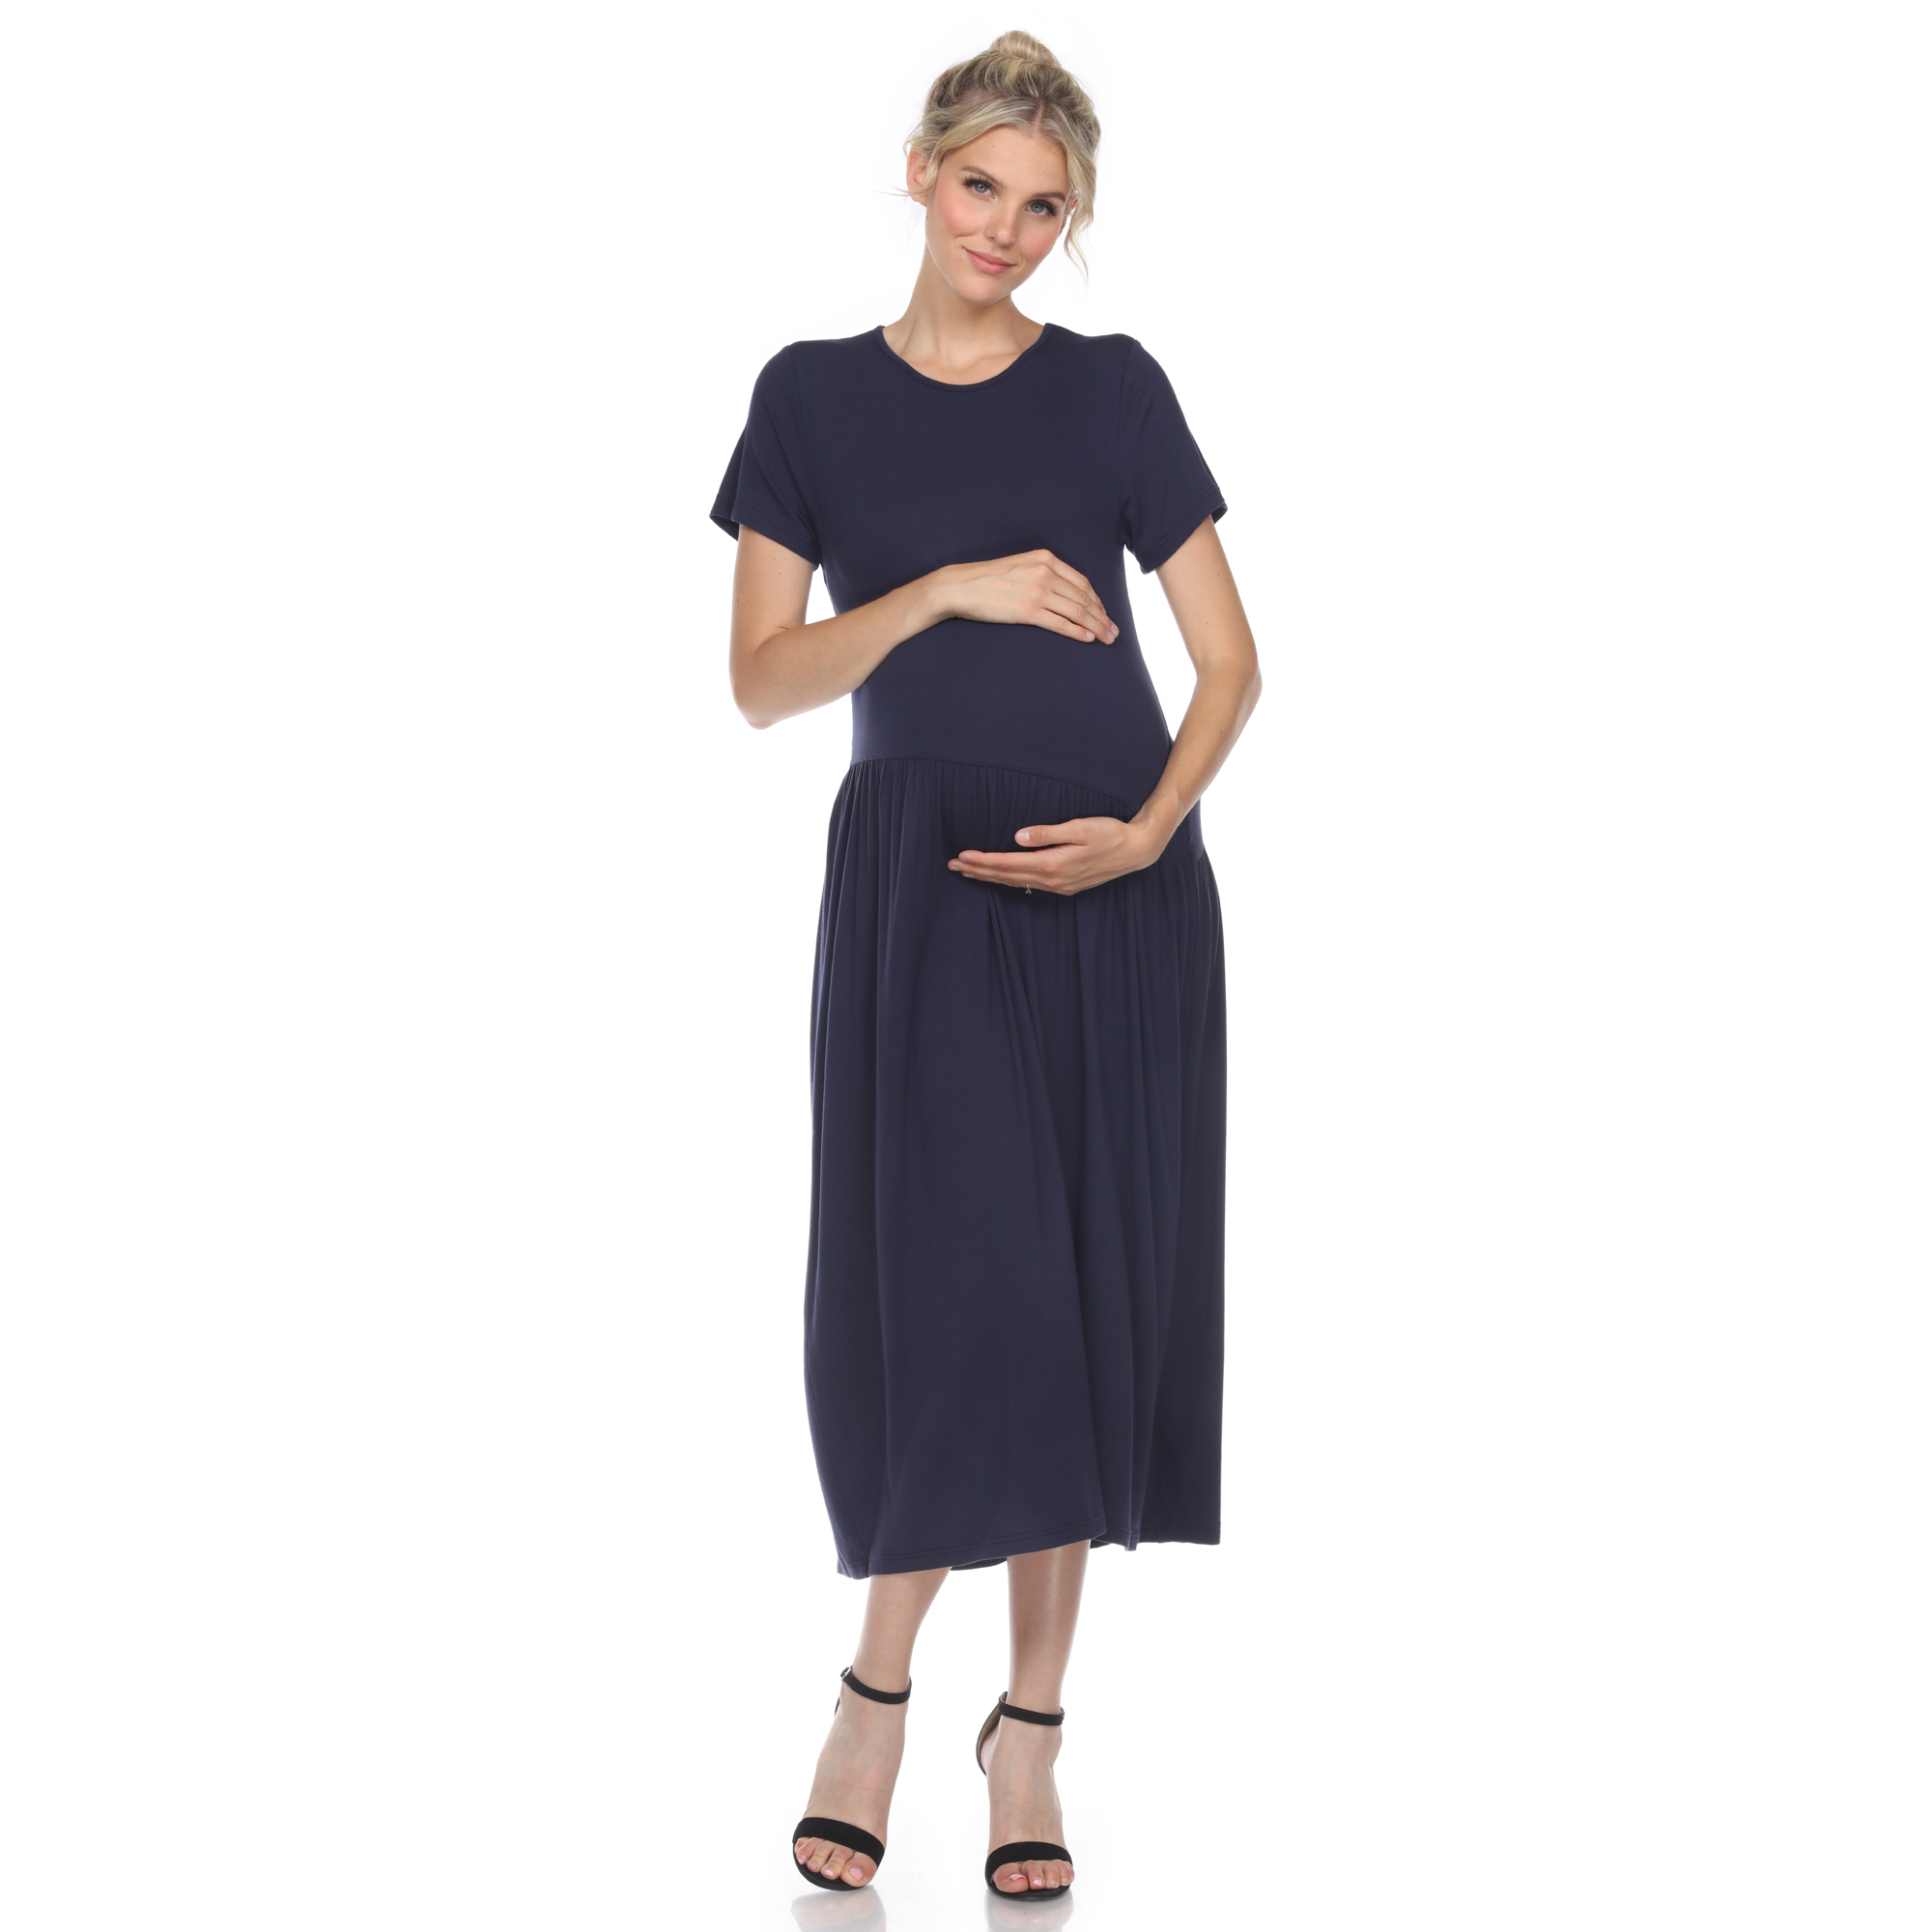 White Mark Womenâs Maternity Short Sleeve Maxi Dress - Navy, Medium